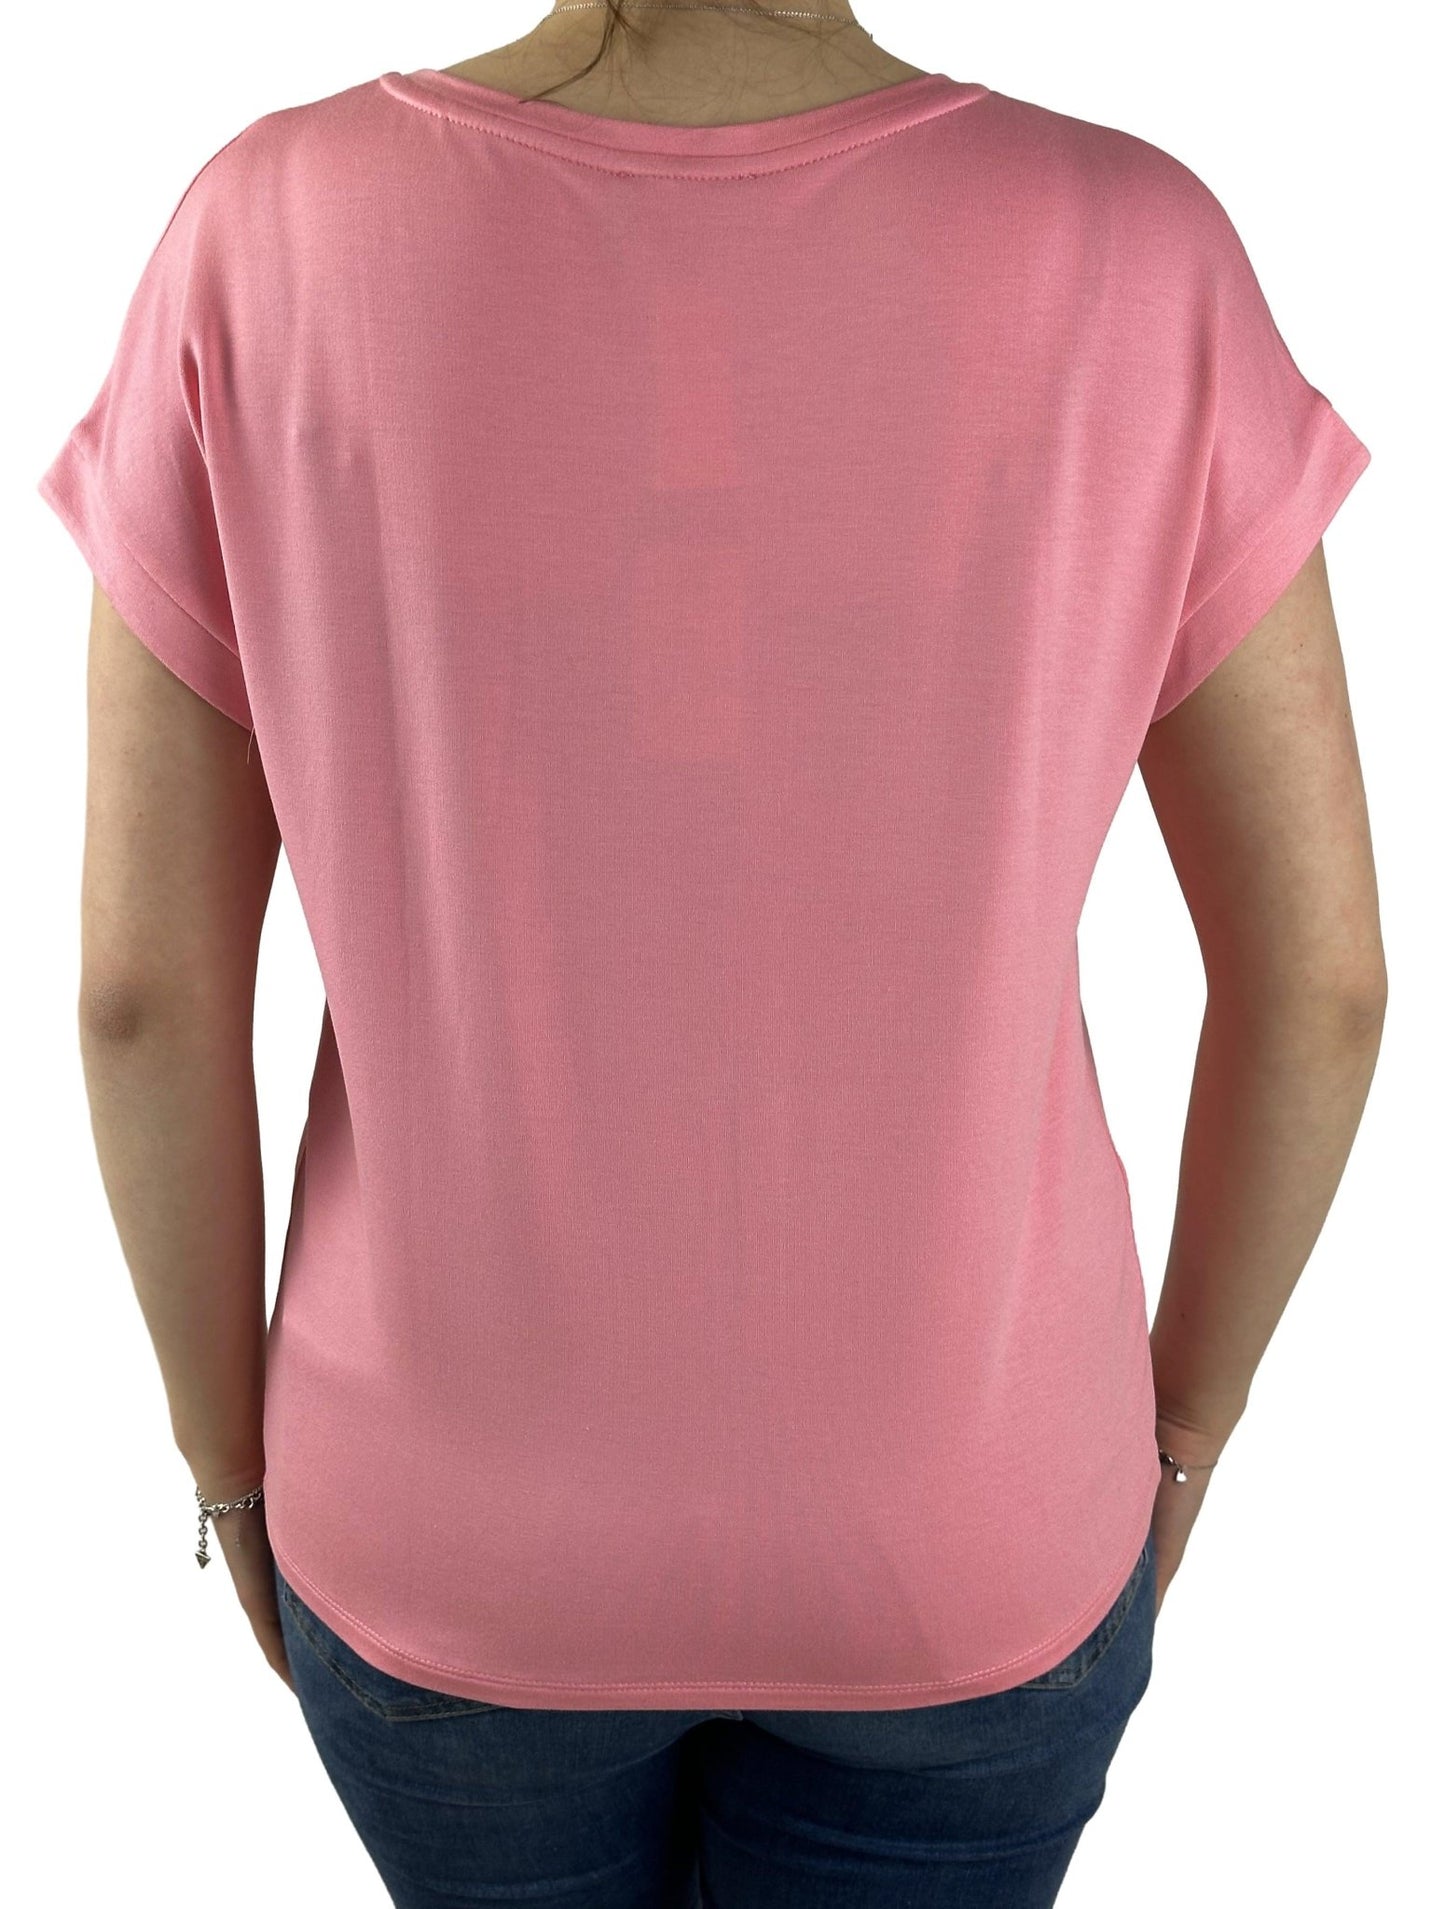 Monari Shirt 408507. Mode von Monari